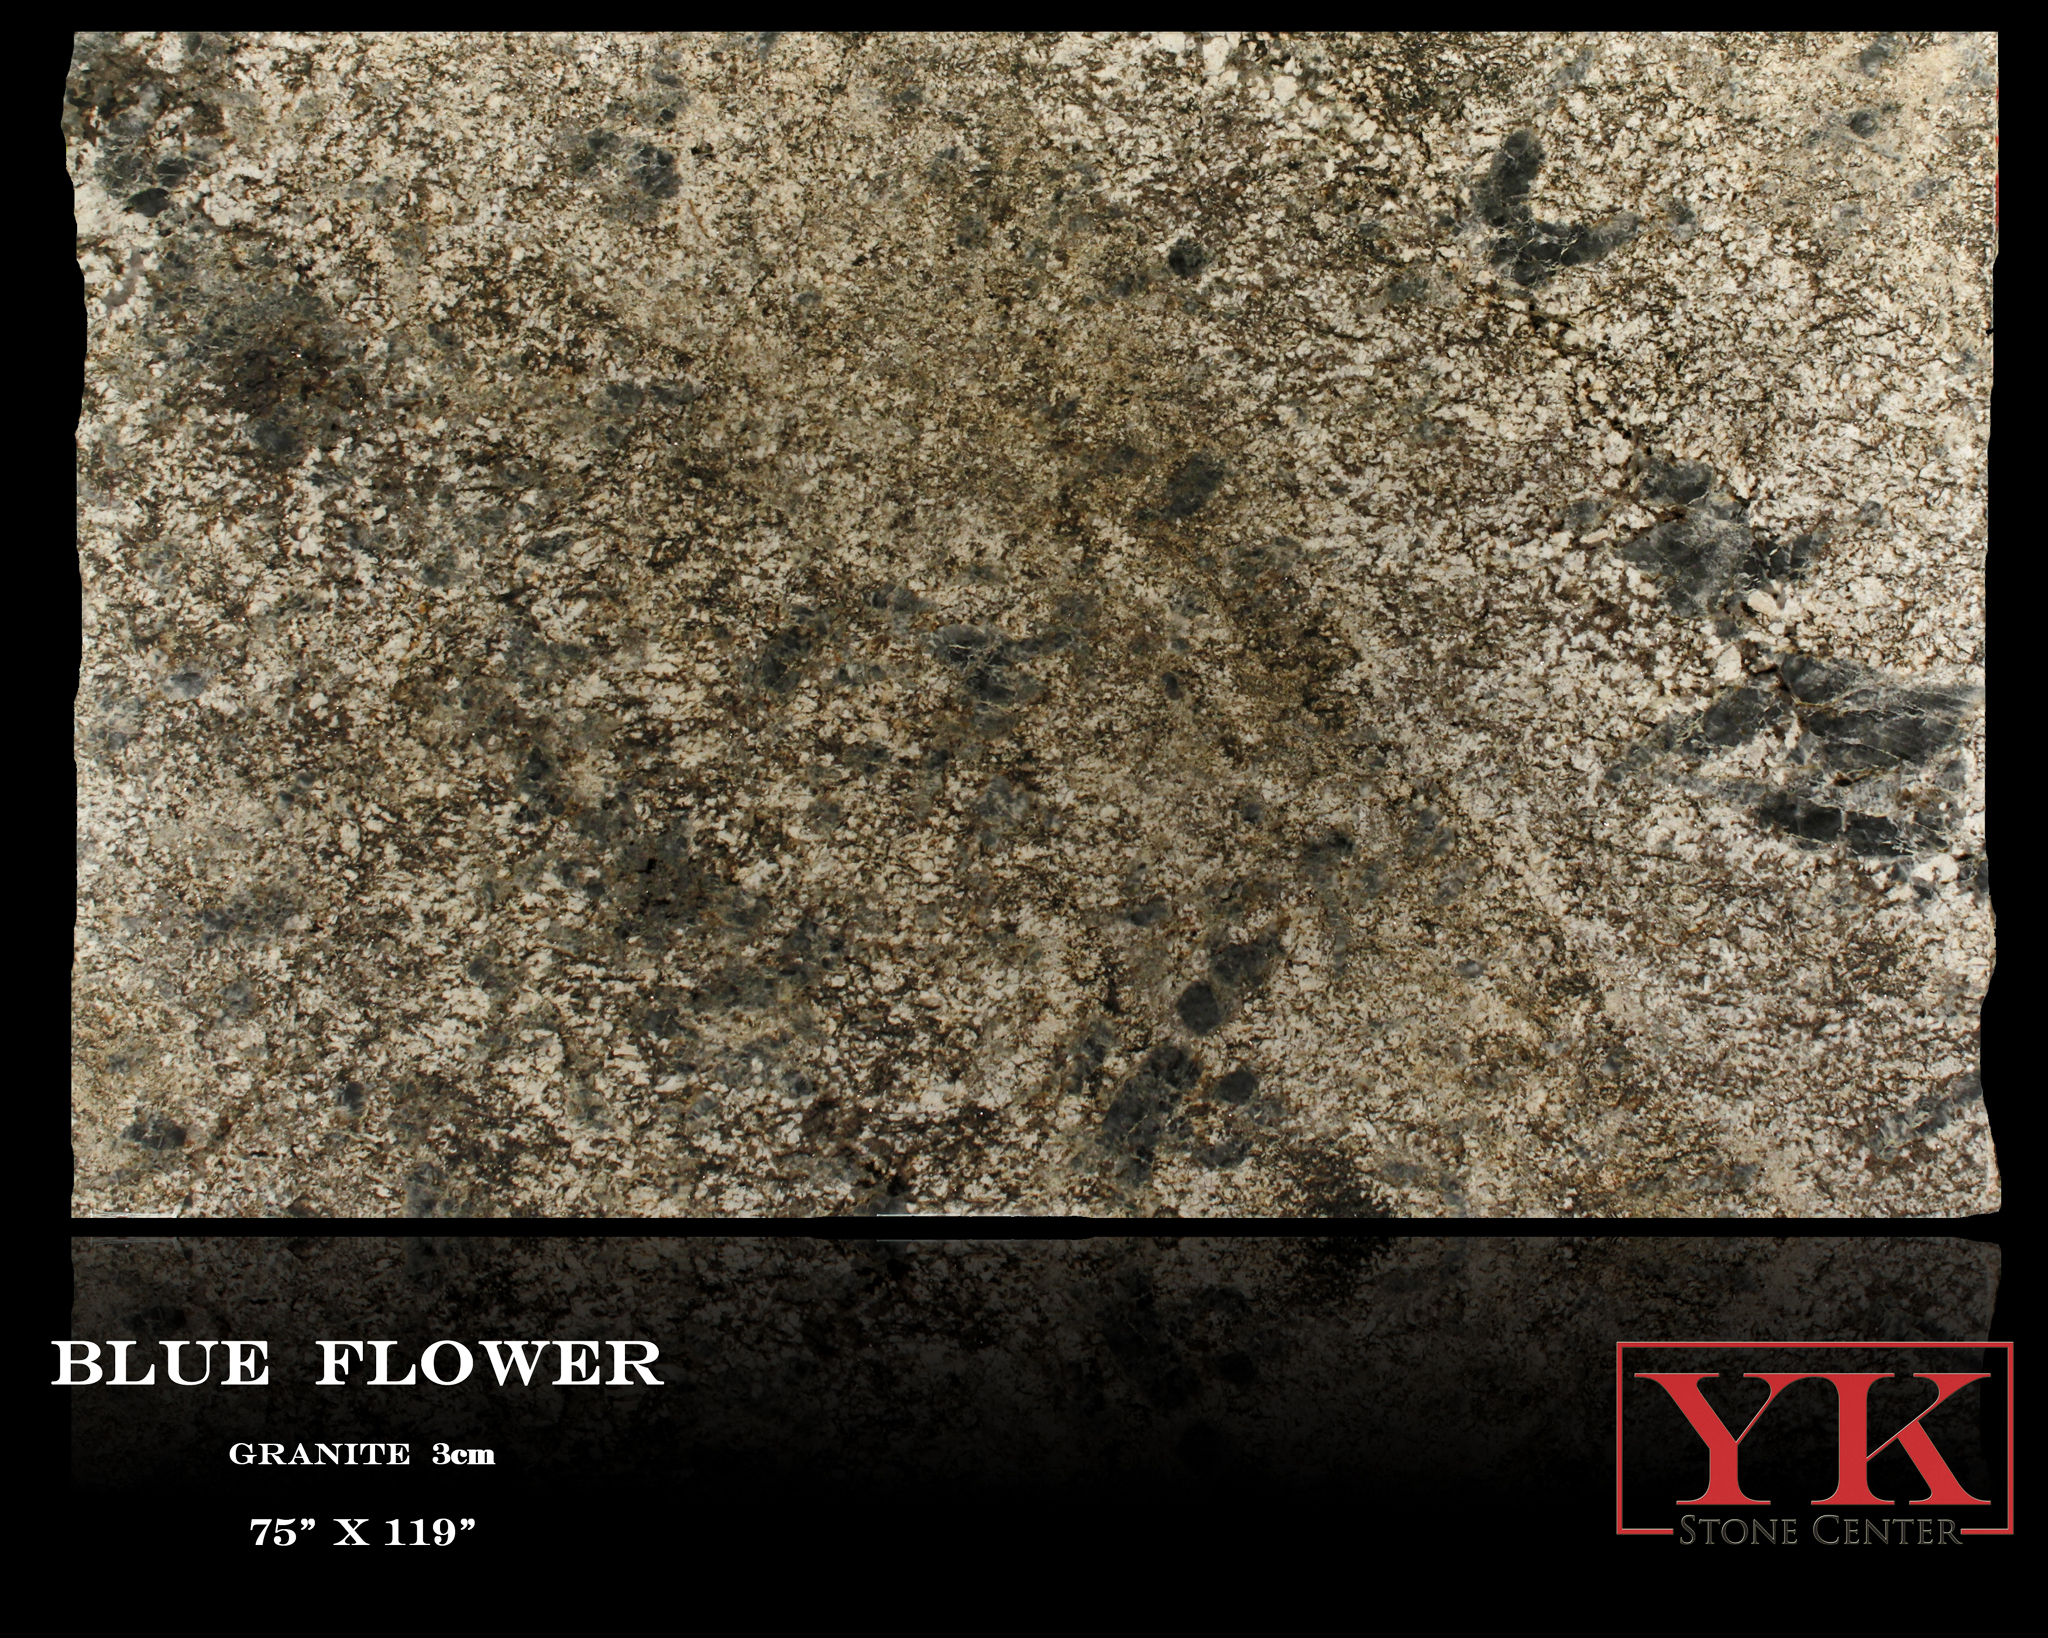 Blue Flower Granite Slabs, YK Stone Center In Denver Colorado, Natural Stone Showroom